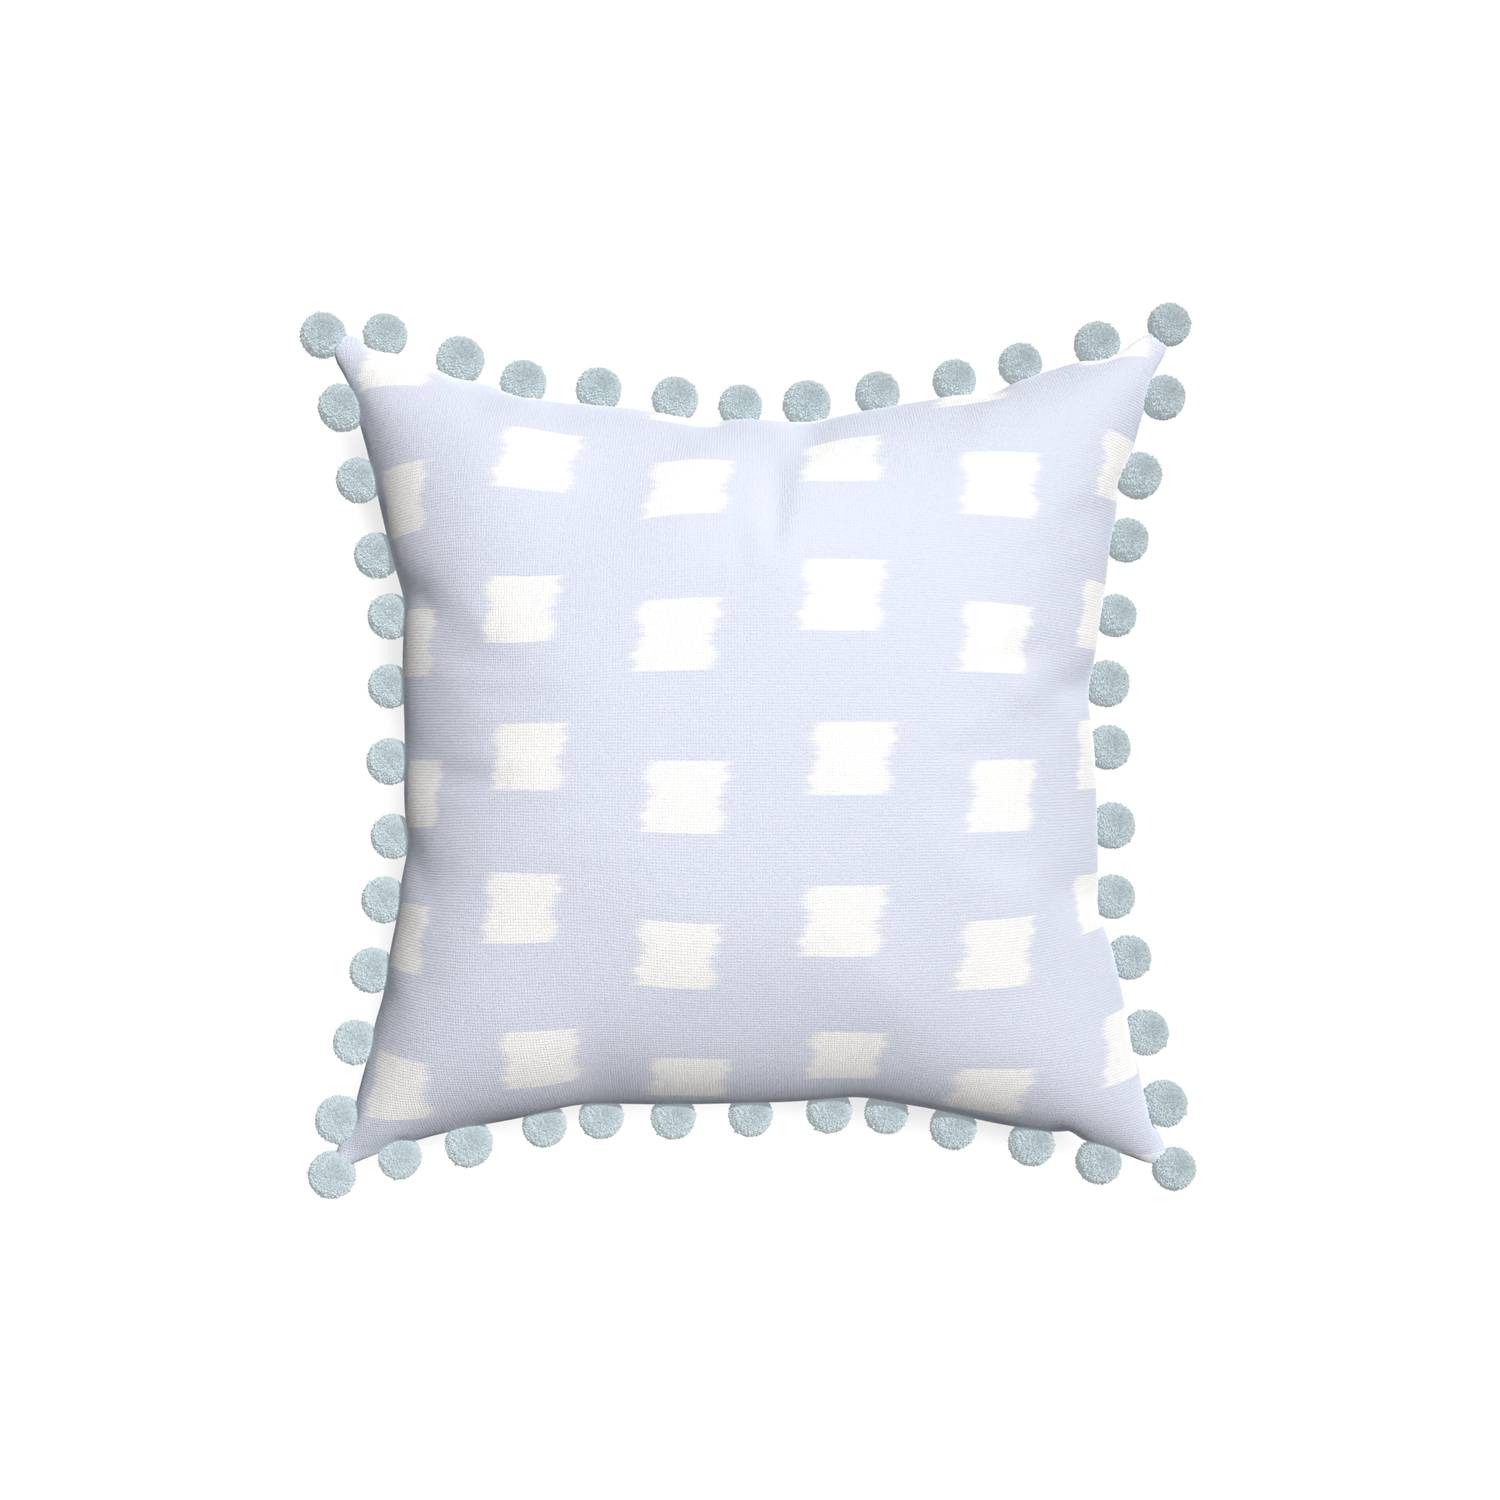 18-square denton custom sky blue patternpillow with powder pom pom on white background